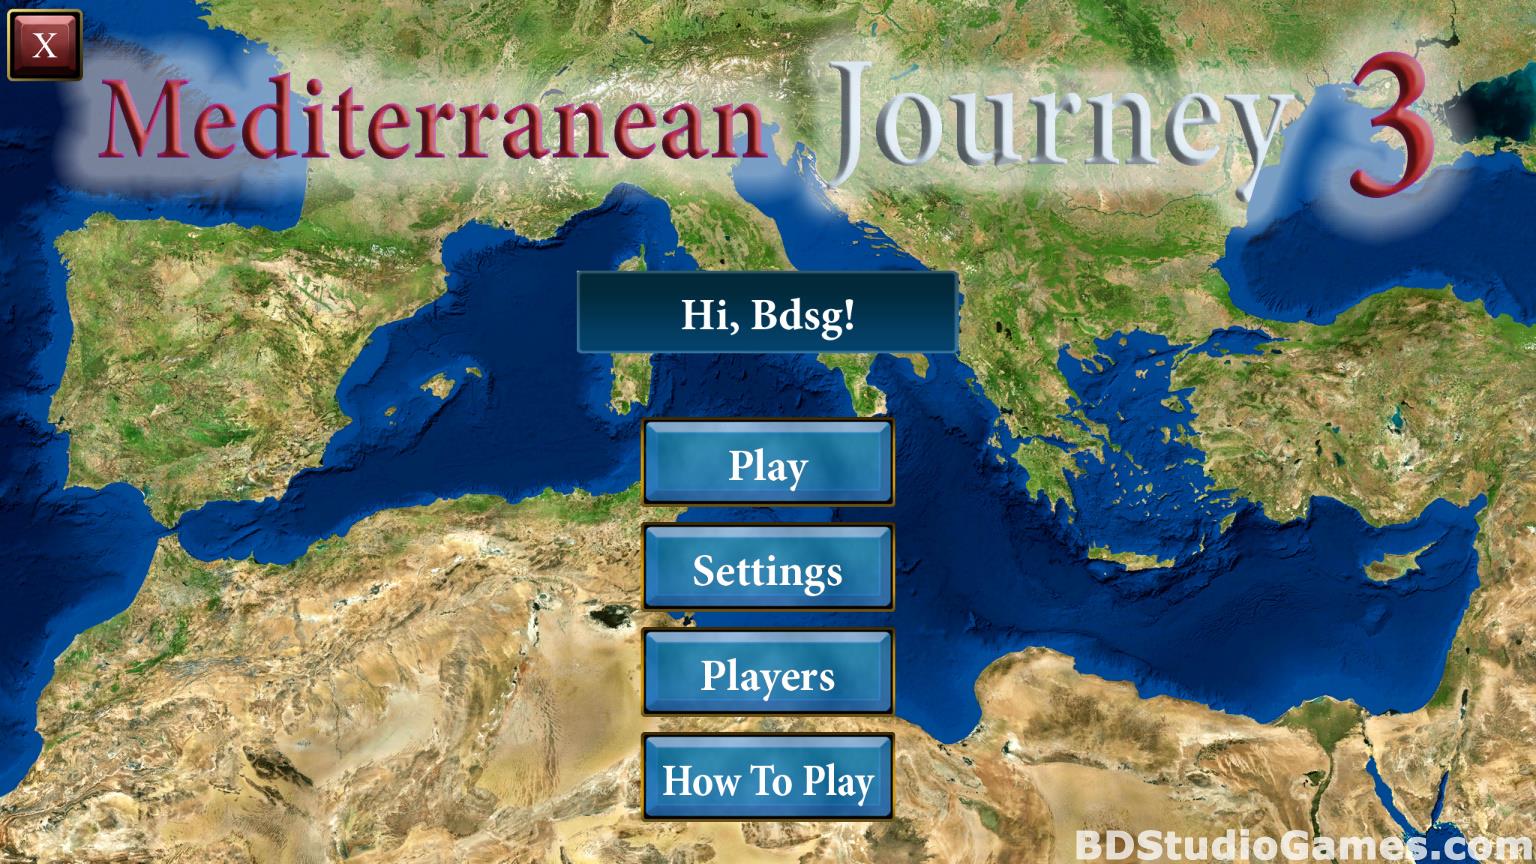 Mediterranean Journey 3 Free Download Screenshots 01